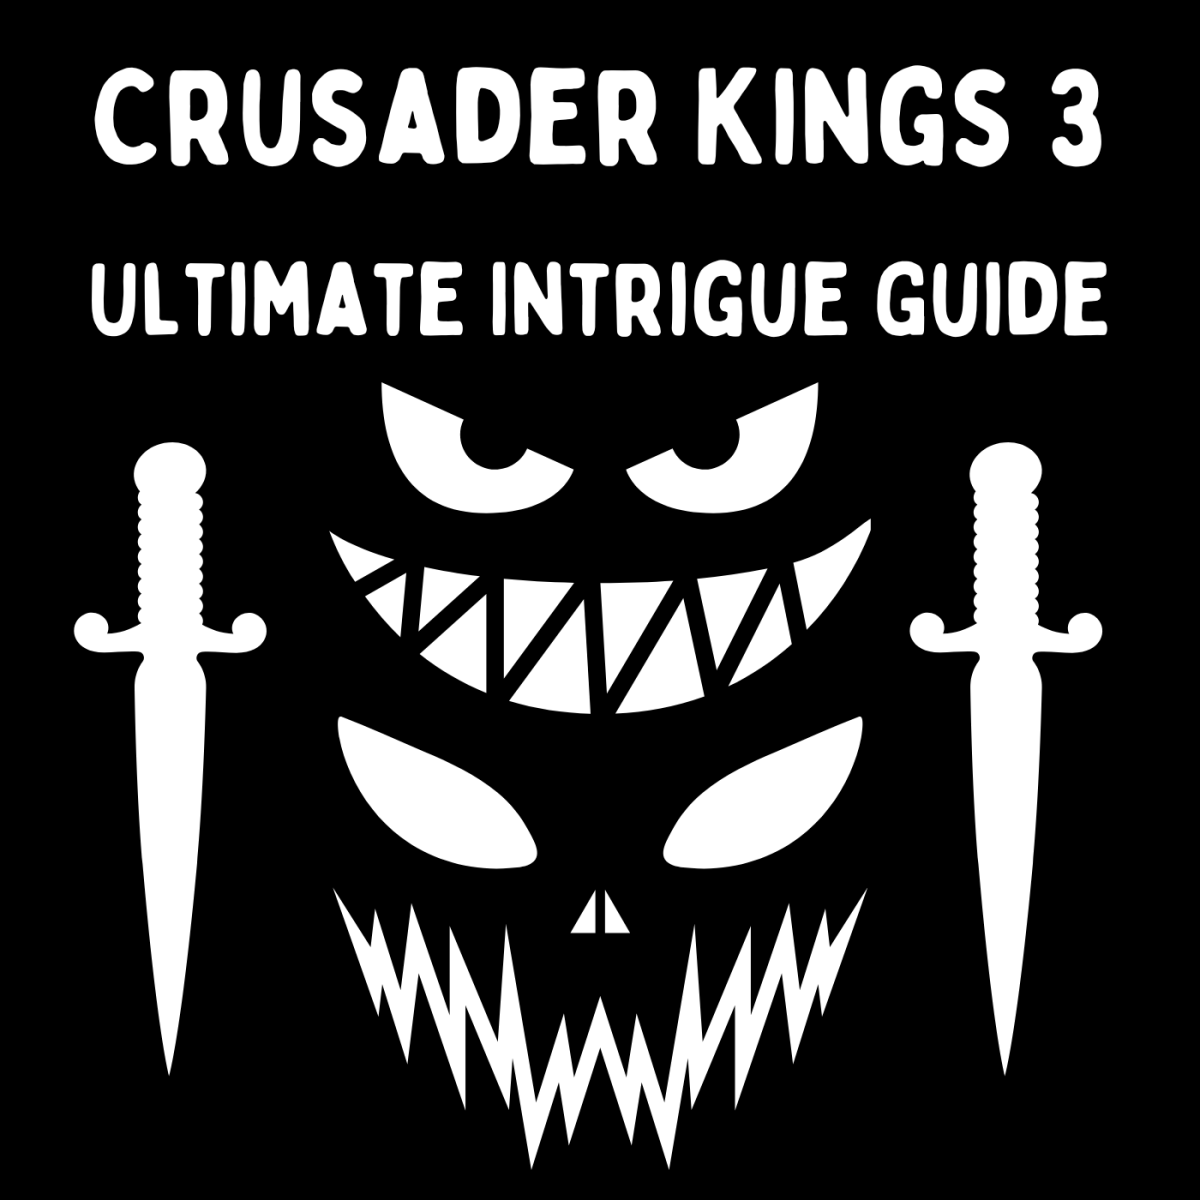 Crusader Kings 3 Intrigue Guide (CK3)